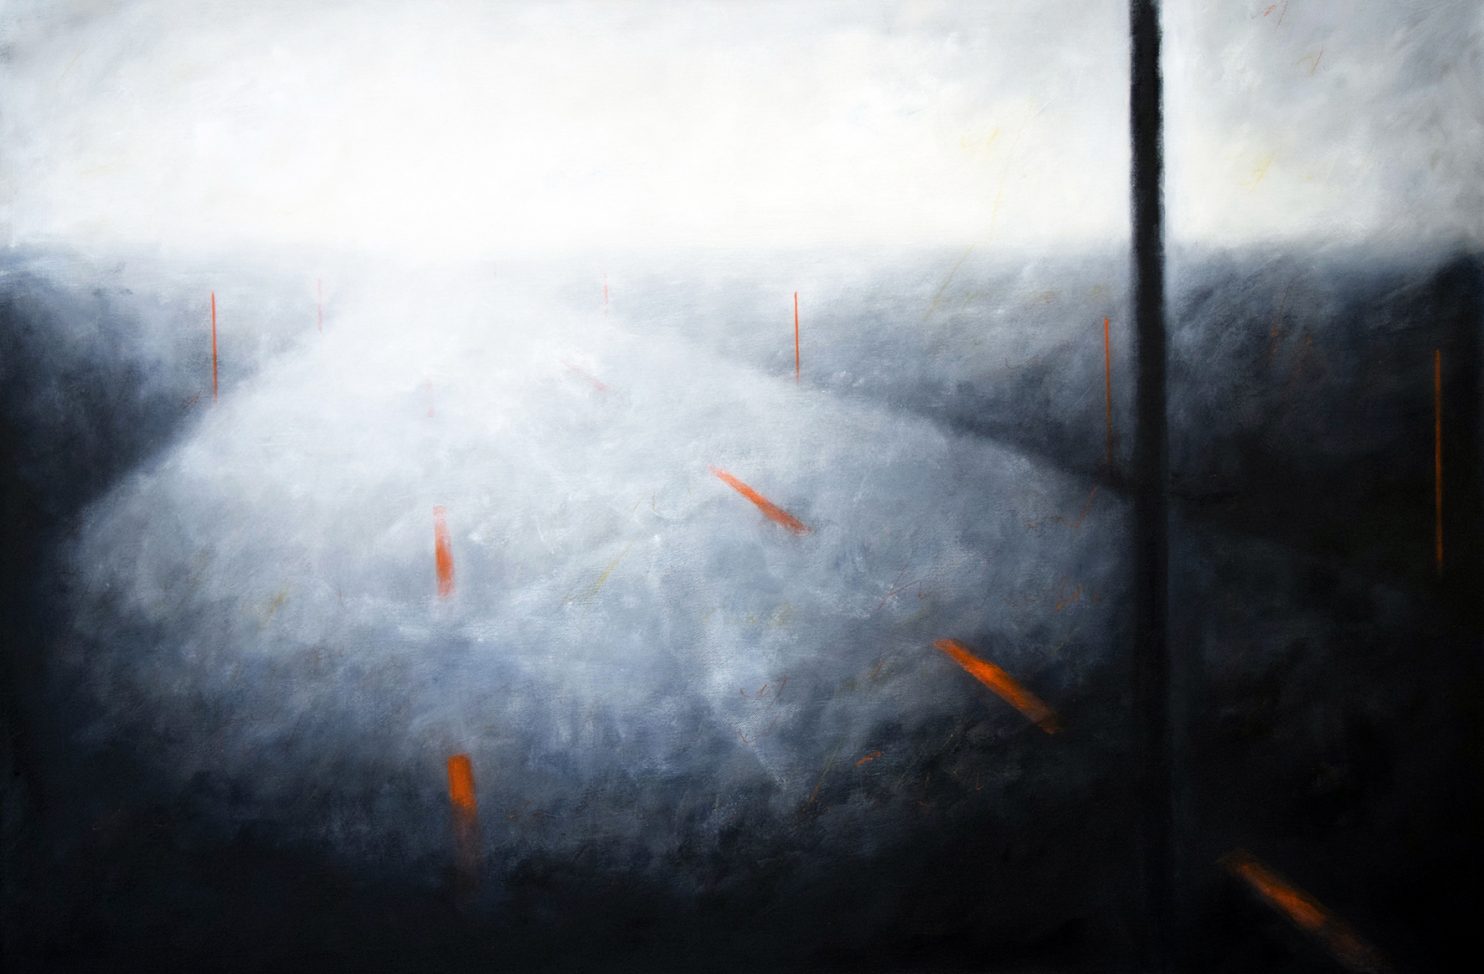 MORALES ERNESTO, Invisible bridges, 2014, oil on canvas, 80x120 cm, Pubblicata Catalogo Invisible bridges